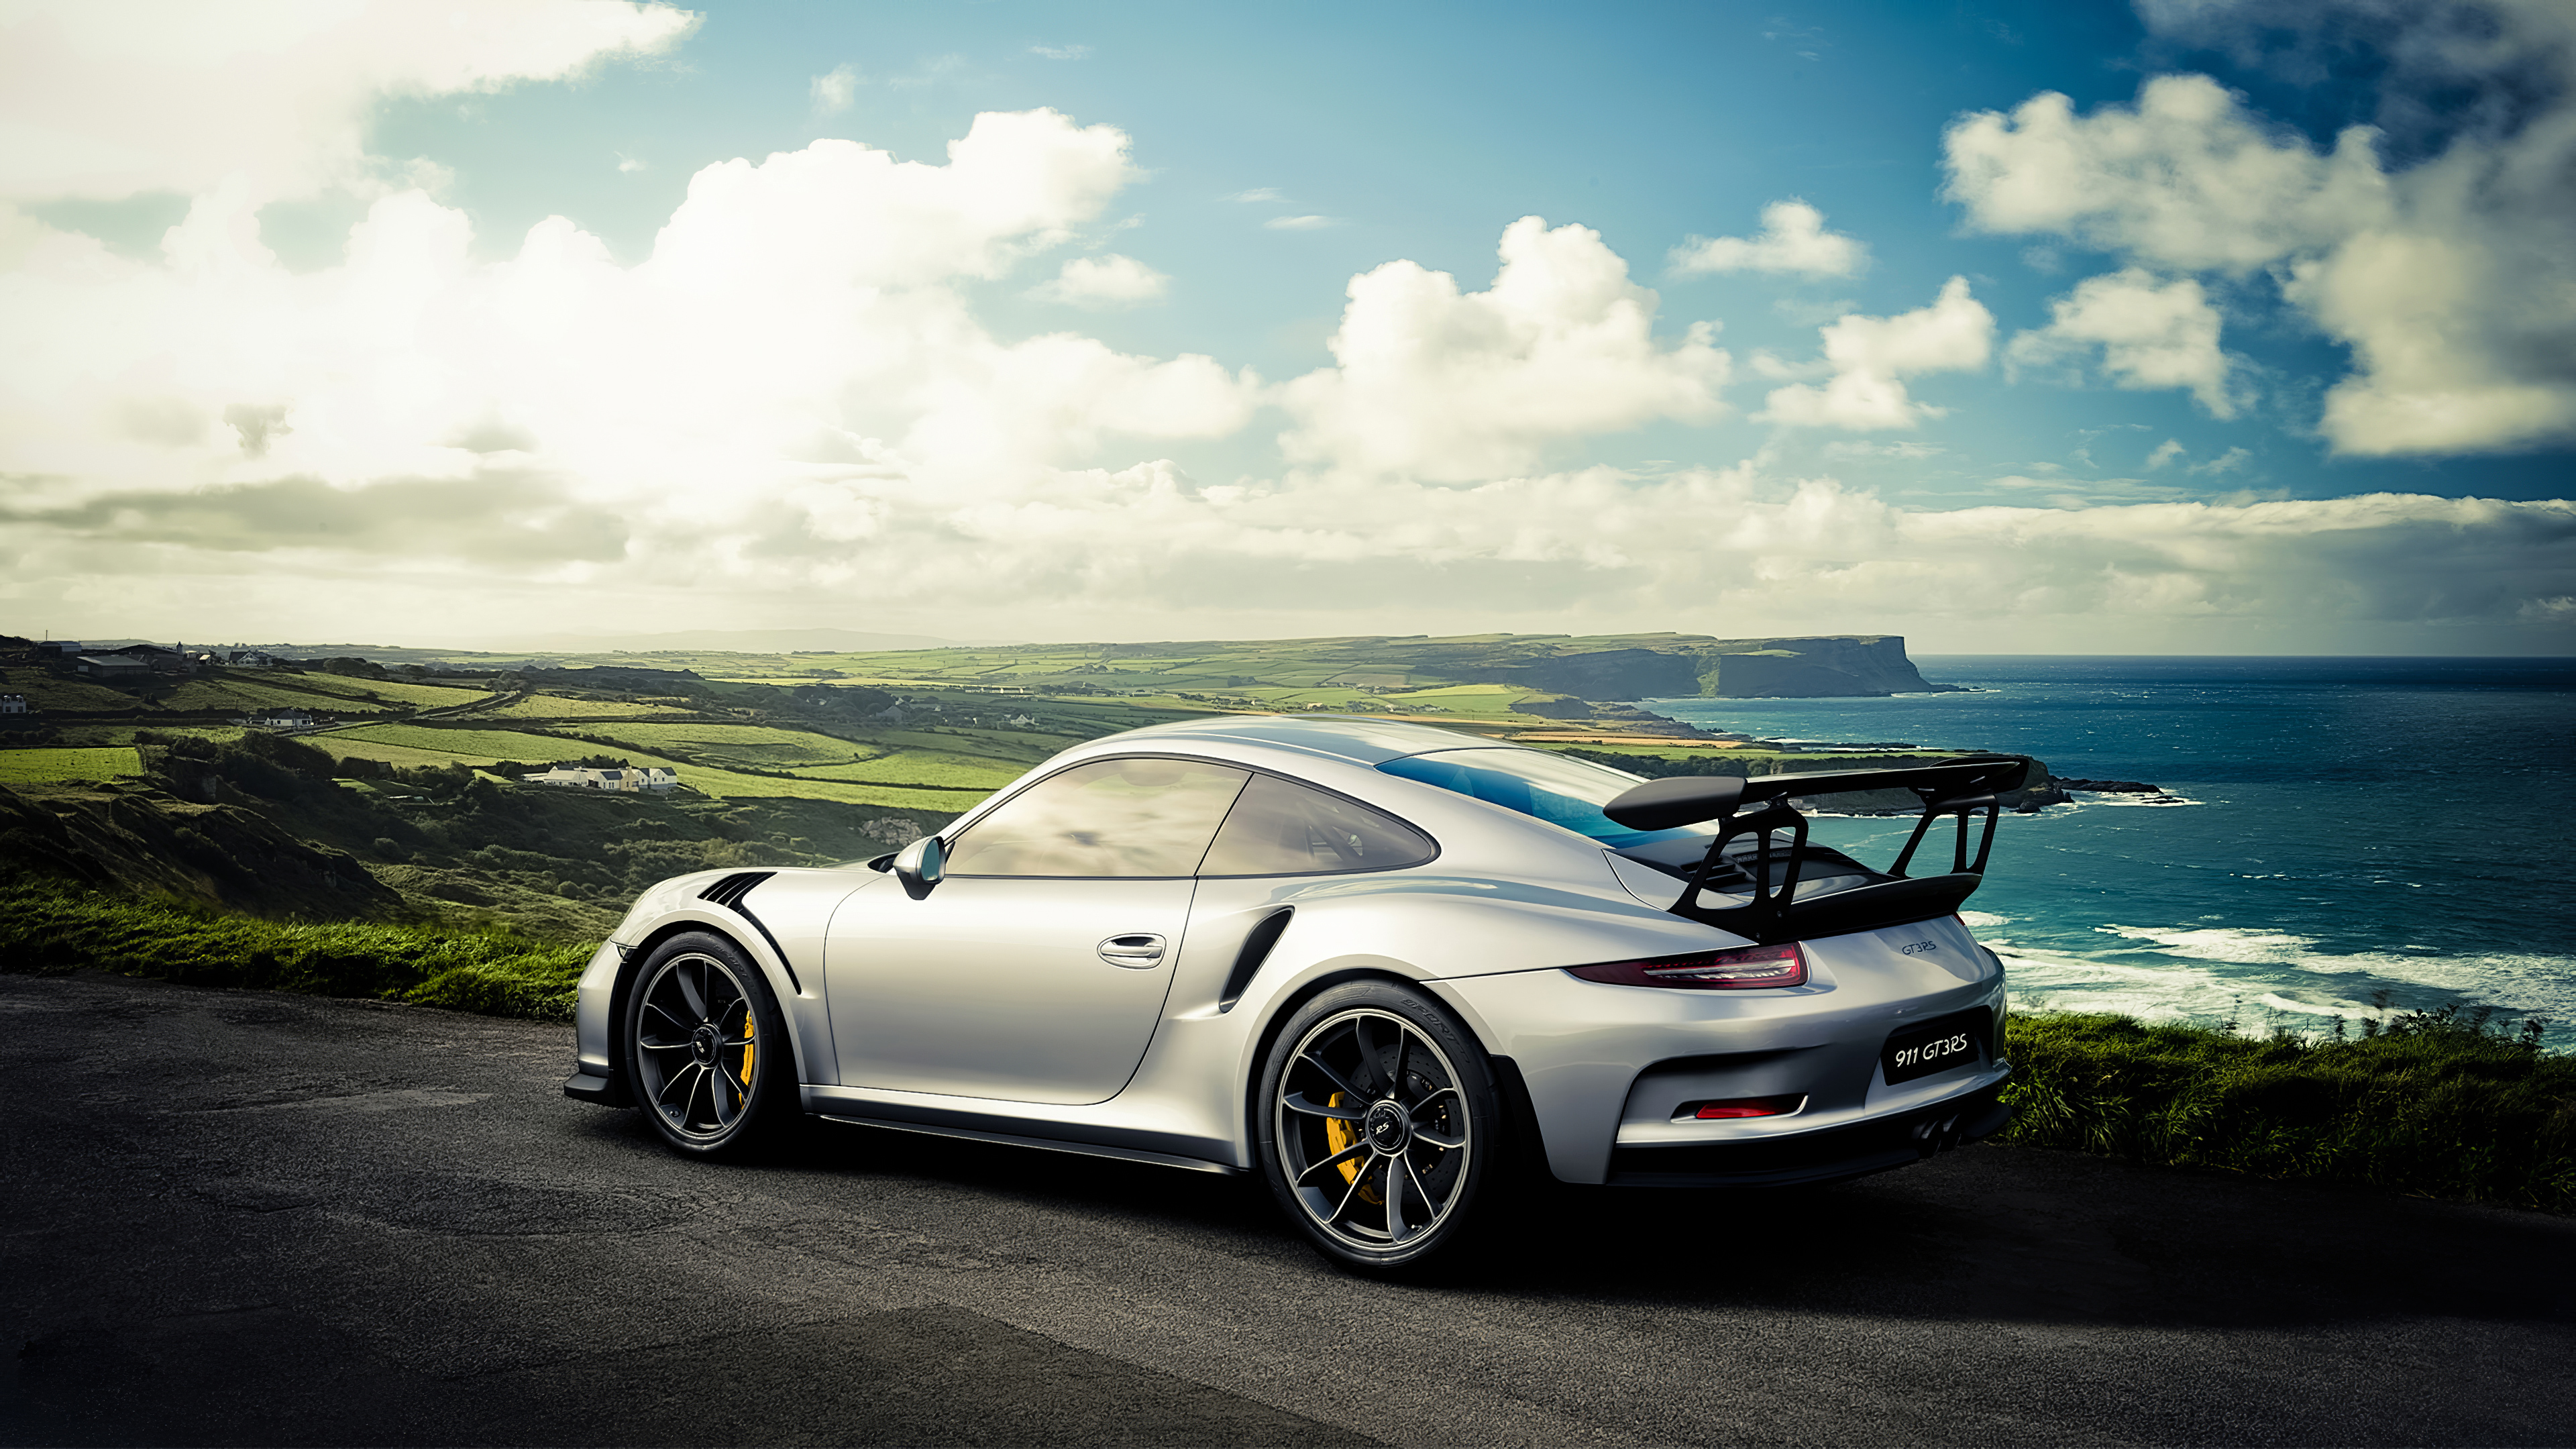 Porsche 911 Gt3 Rs 2019 4k, HD Cars, 4k Wallpapers, Images